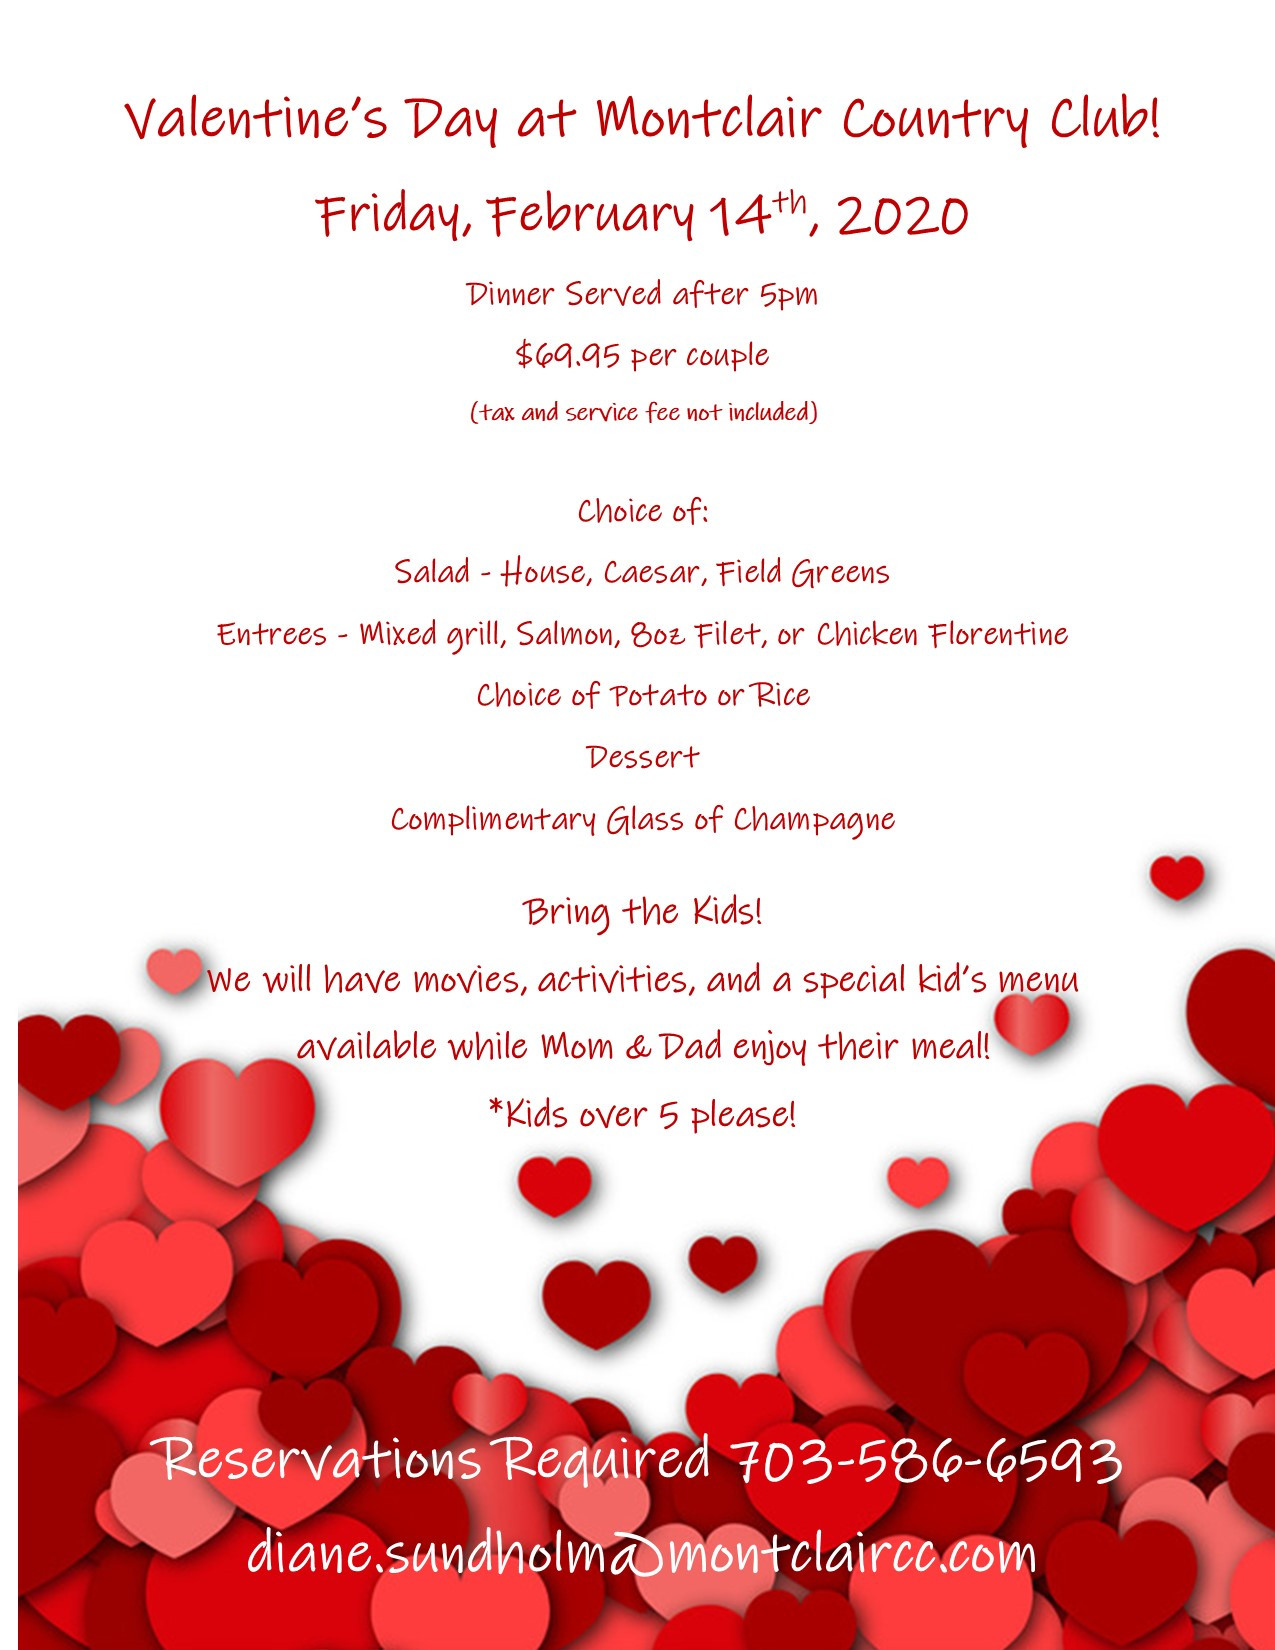 Valentine'S Day Dinner 2020
 Valentines Day Dinner 2020 Montclair Country Club